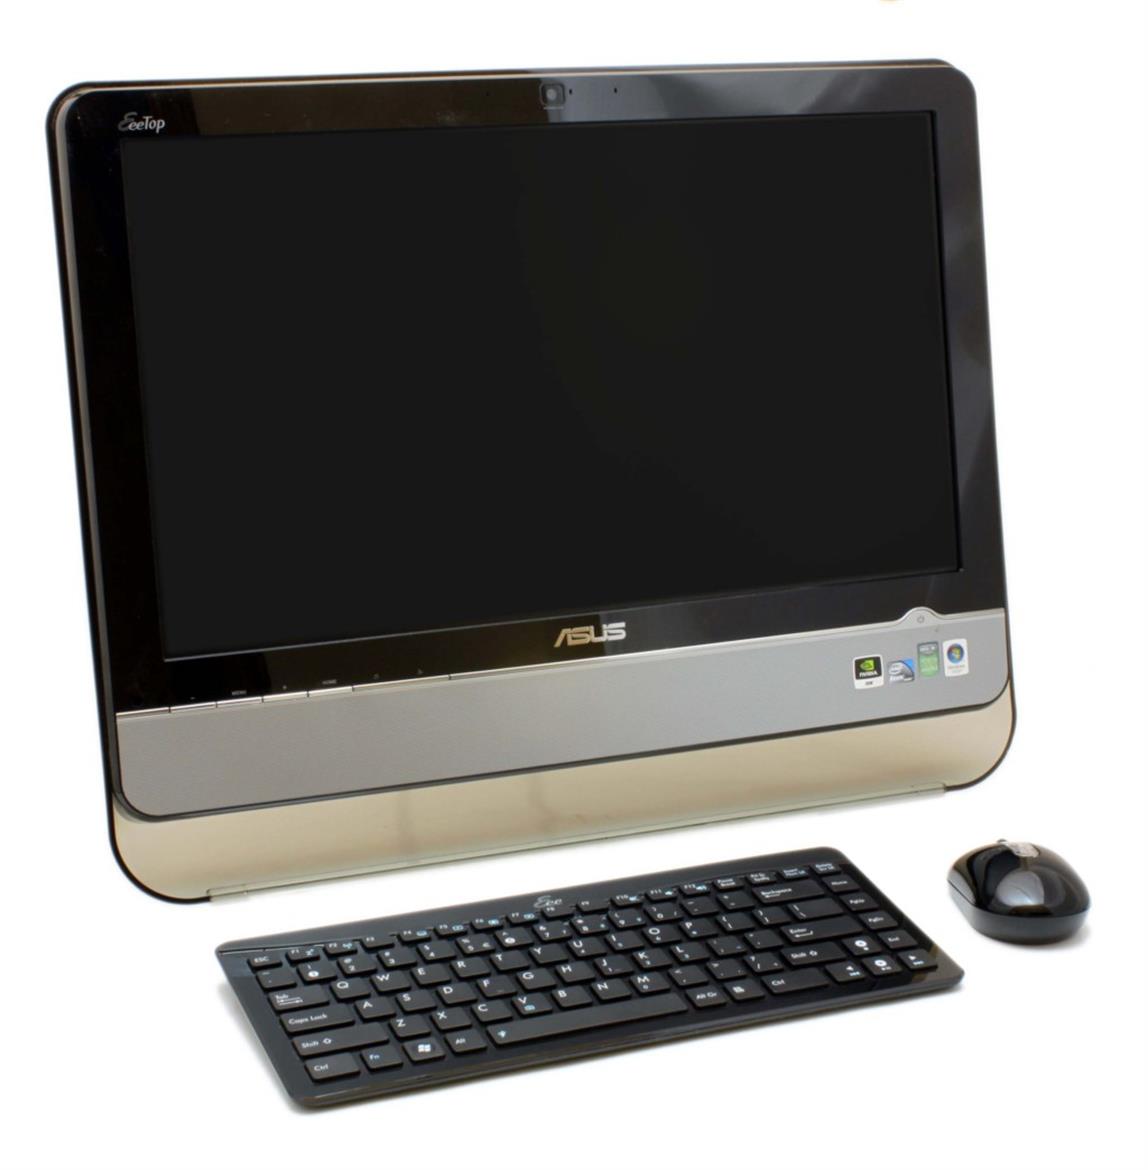 Asus EeeTop PC ET2002 Review